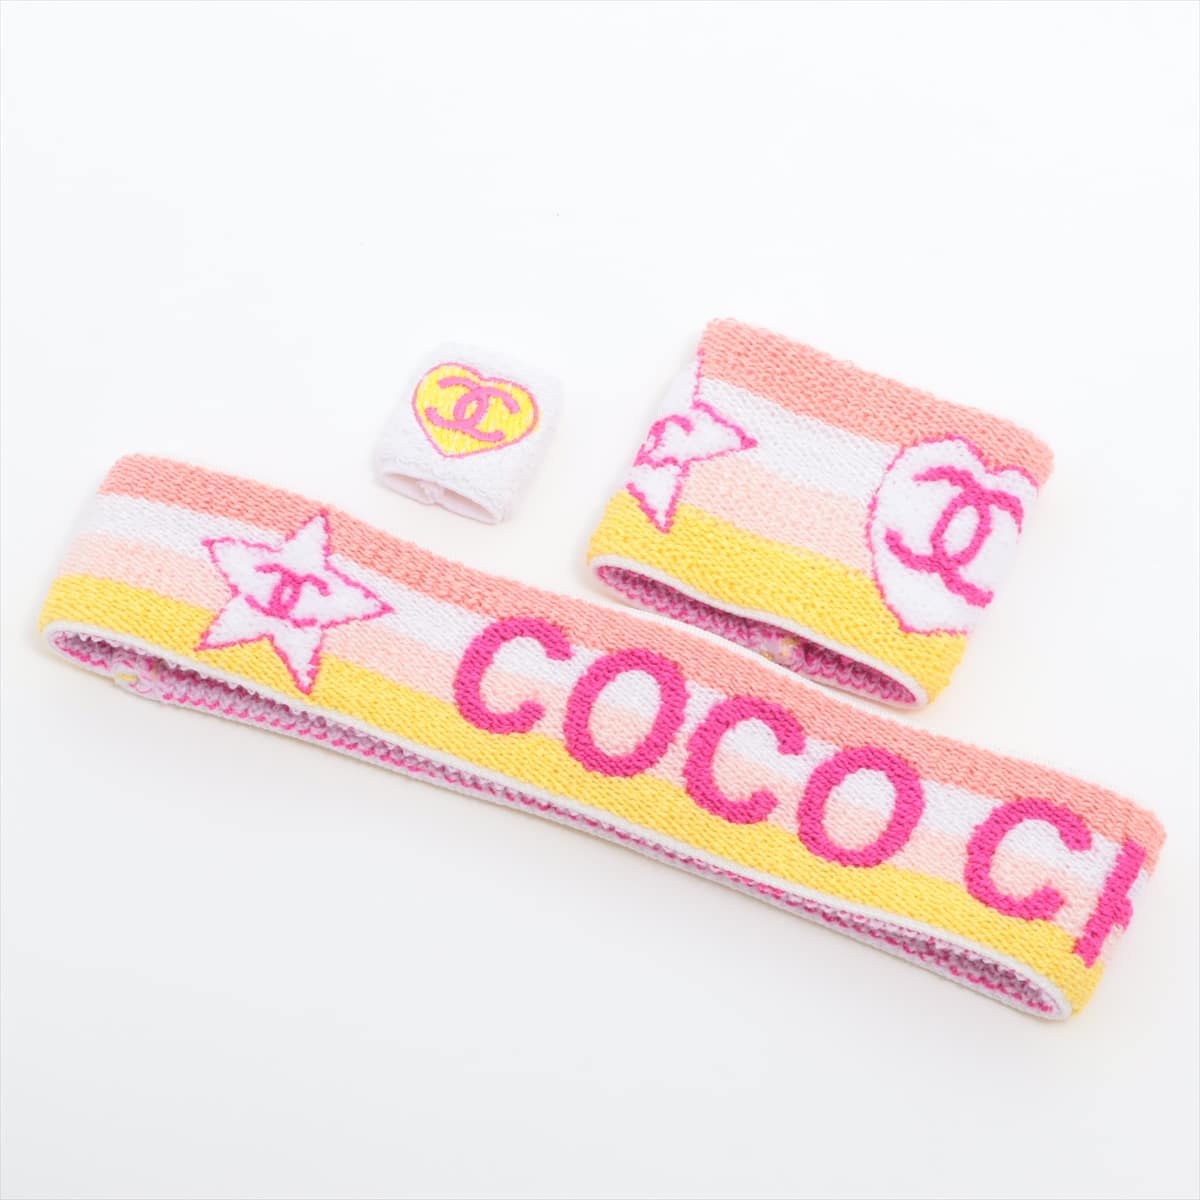 Chanel Coco Mark Hairband Cotton Pink Hairband wristband set